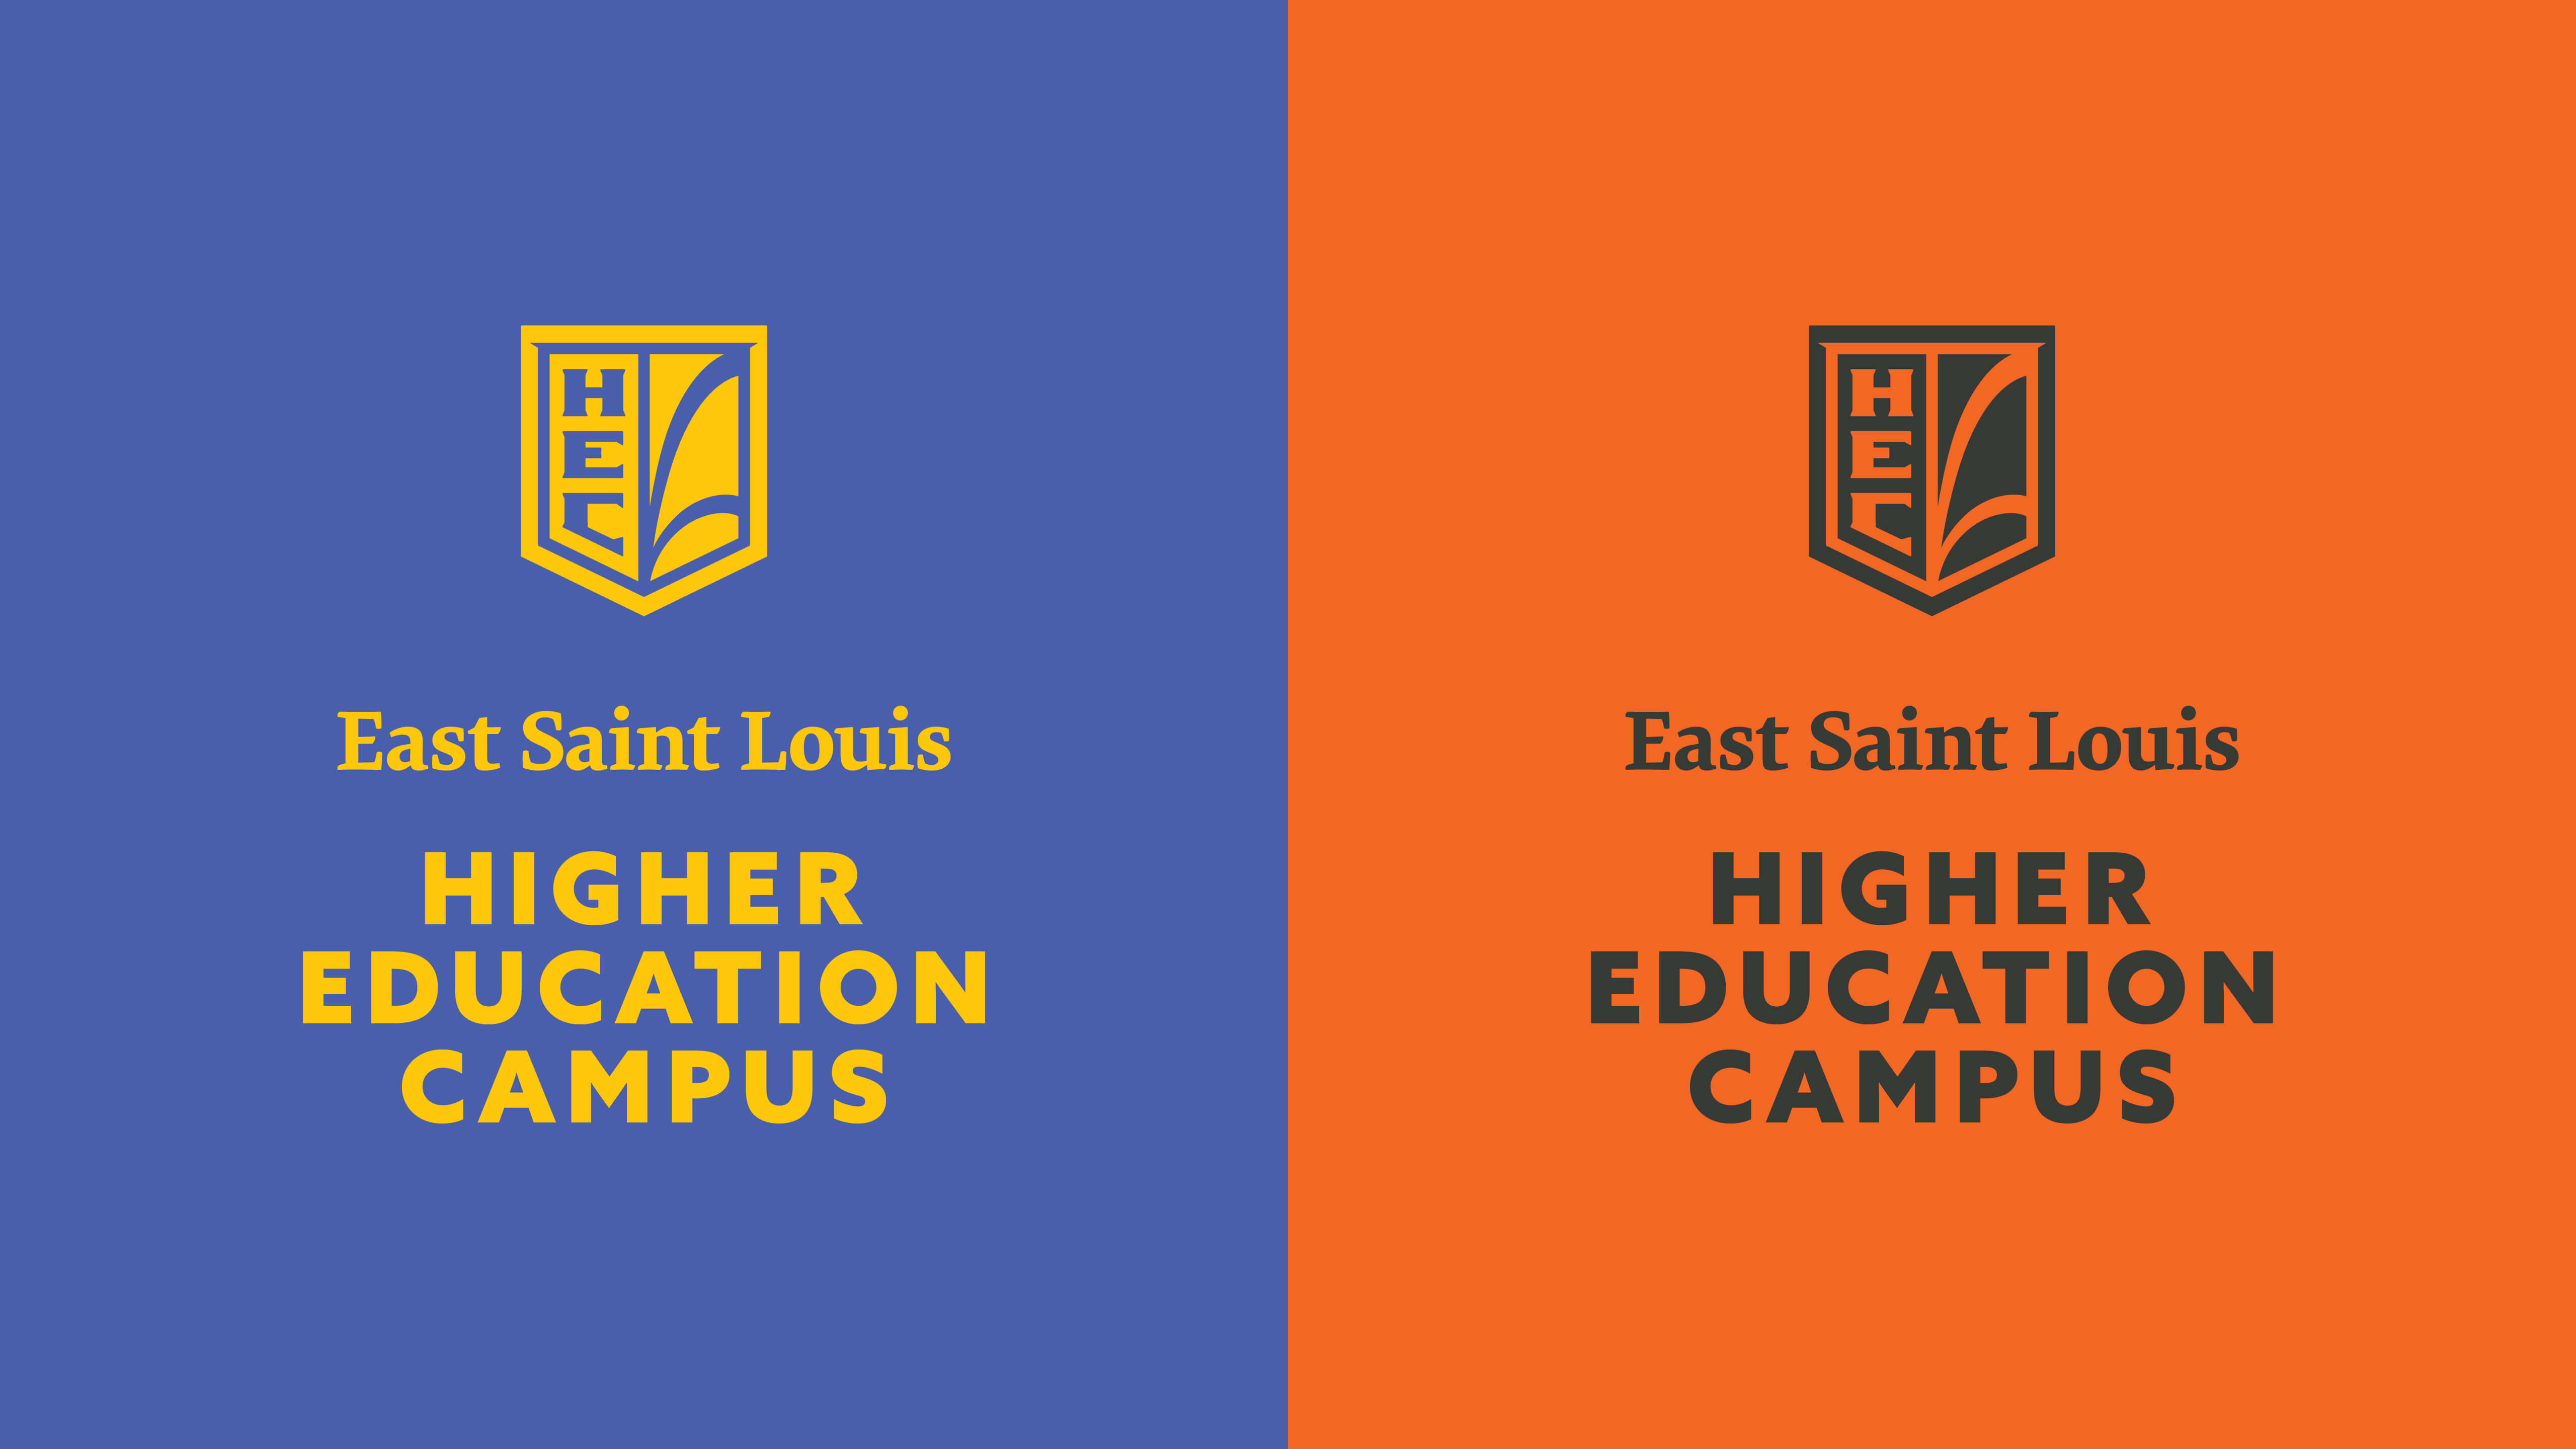 East Saint Louis Higher Education Campus - Branding